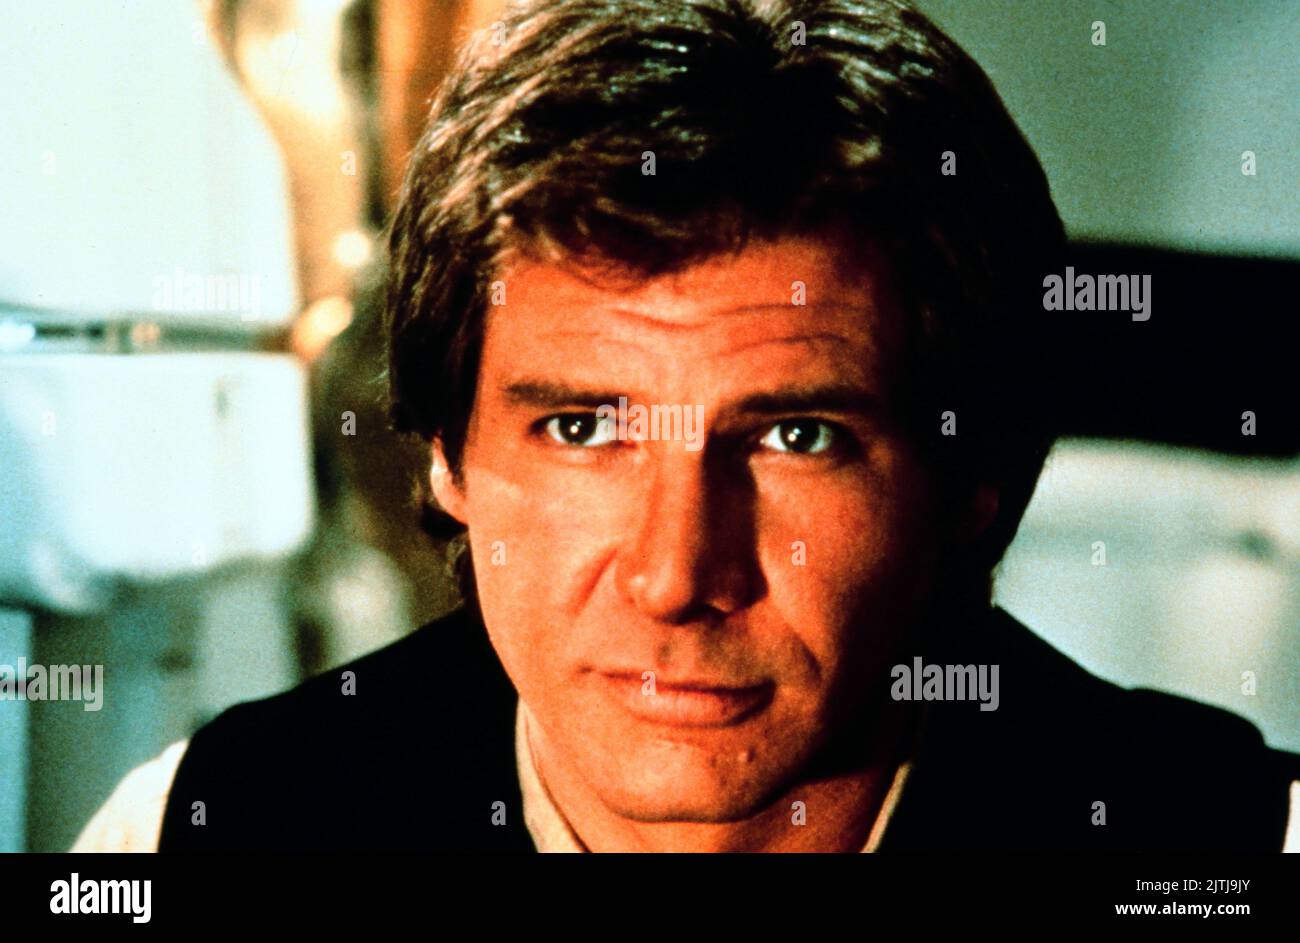 Star Wars, aka Krieg der Sterne, USA 1977, Regie: George Lucas, Darsteller: Harrison Ford als Han solo Foto Stock